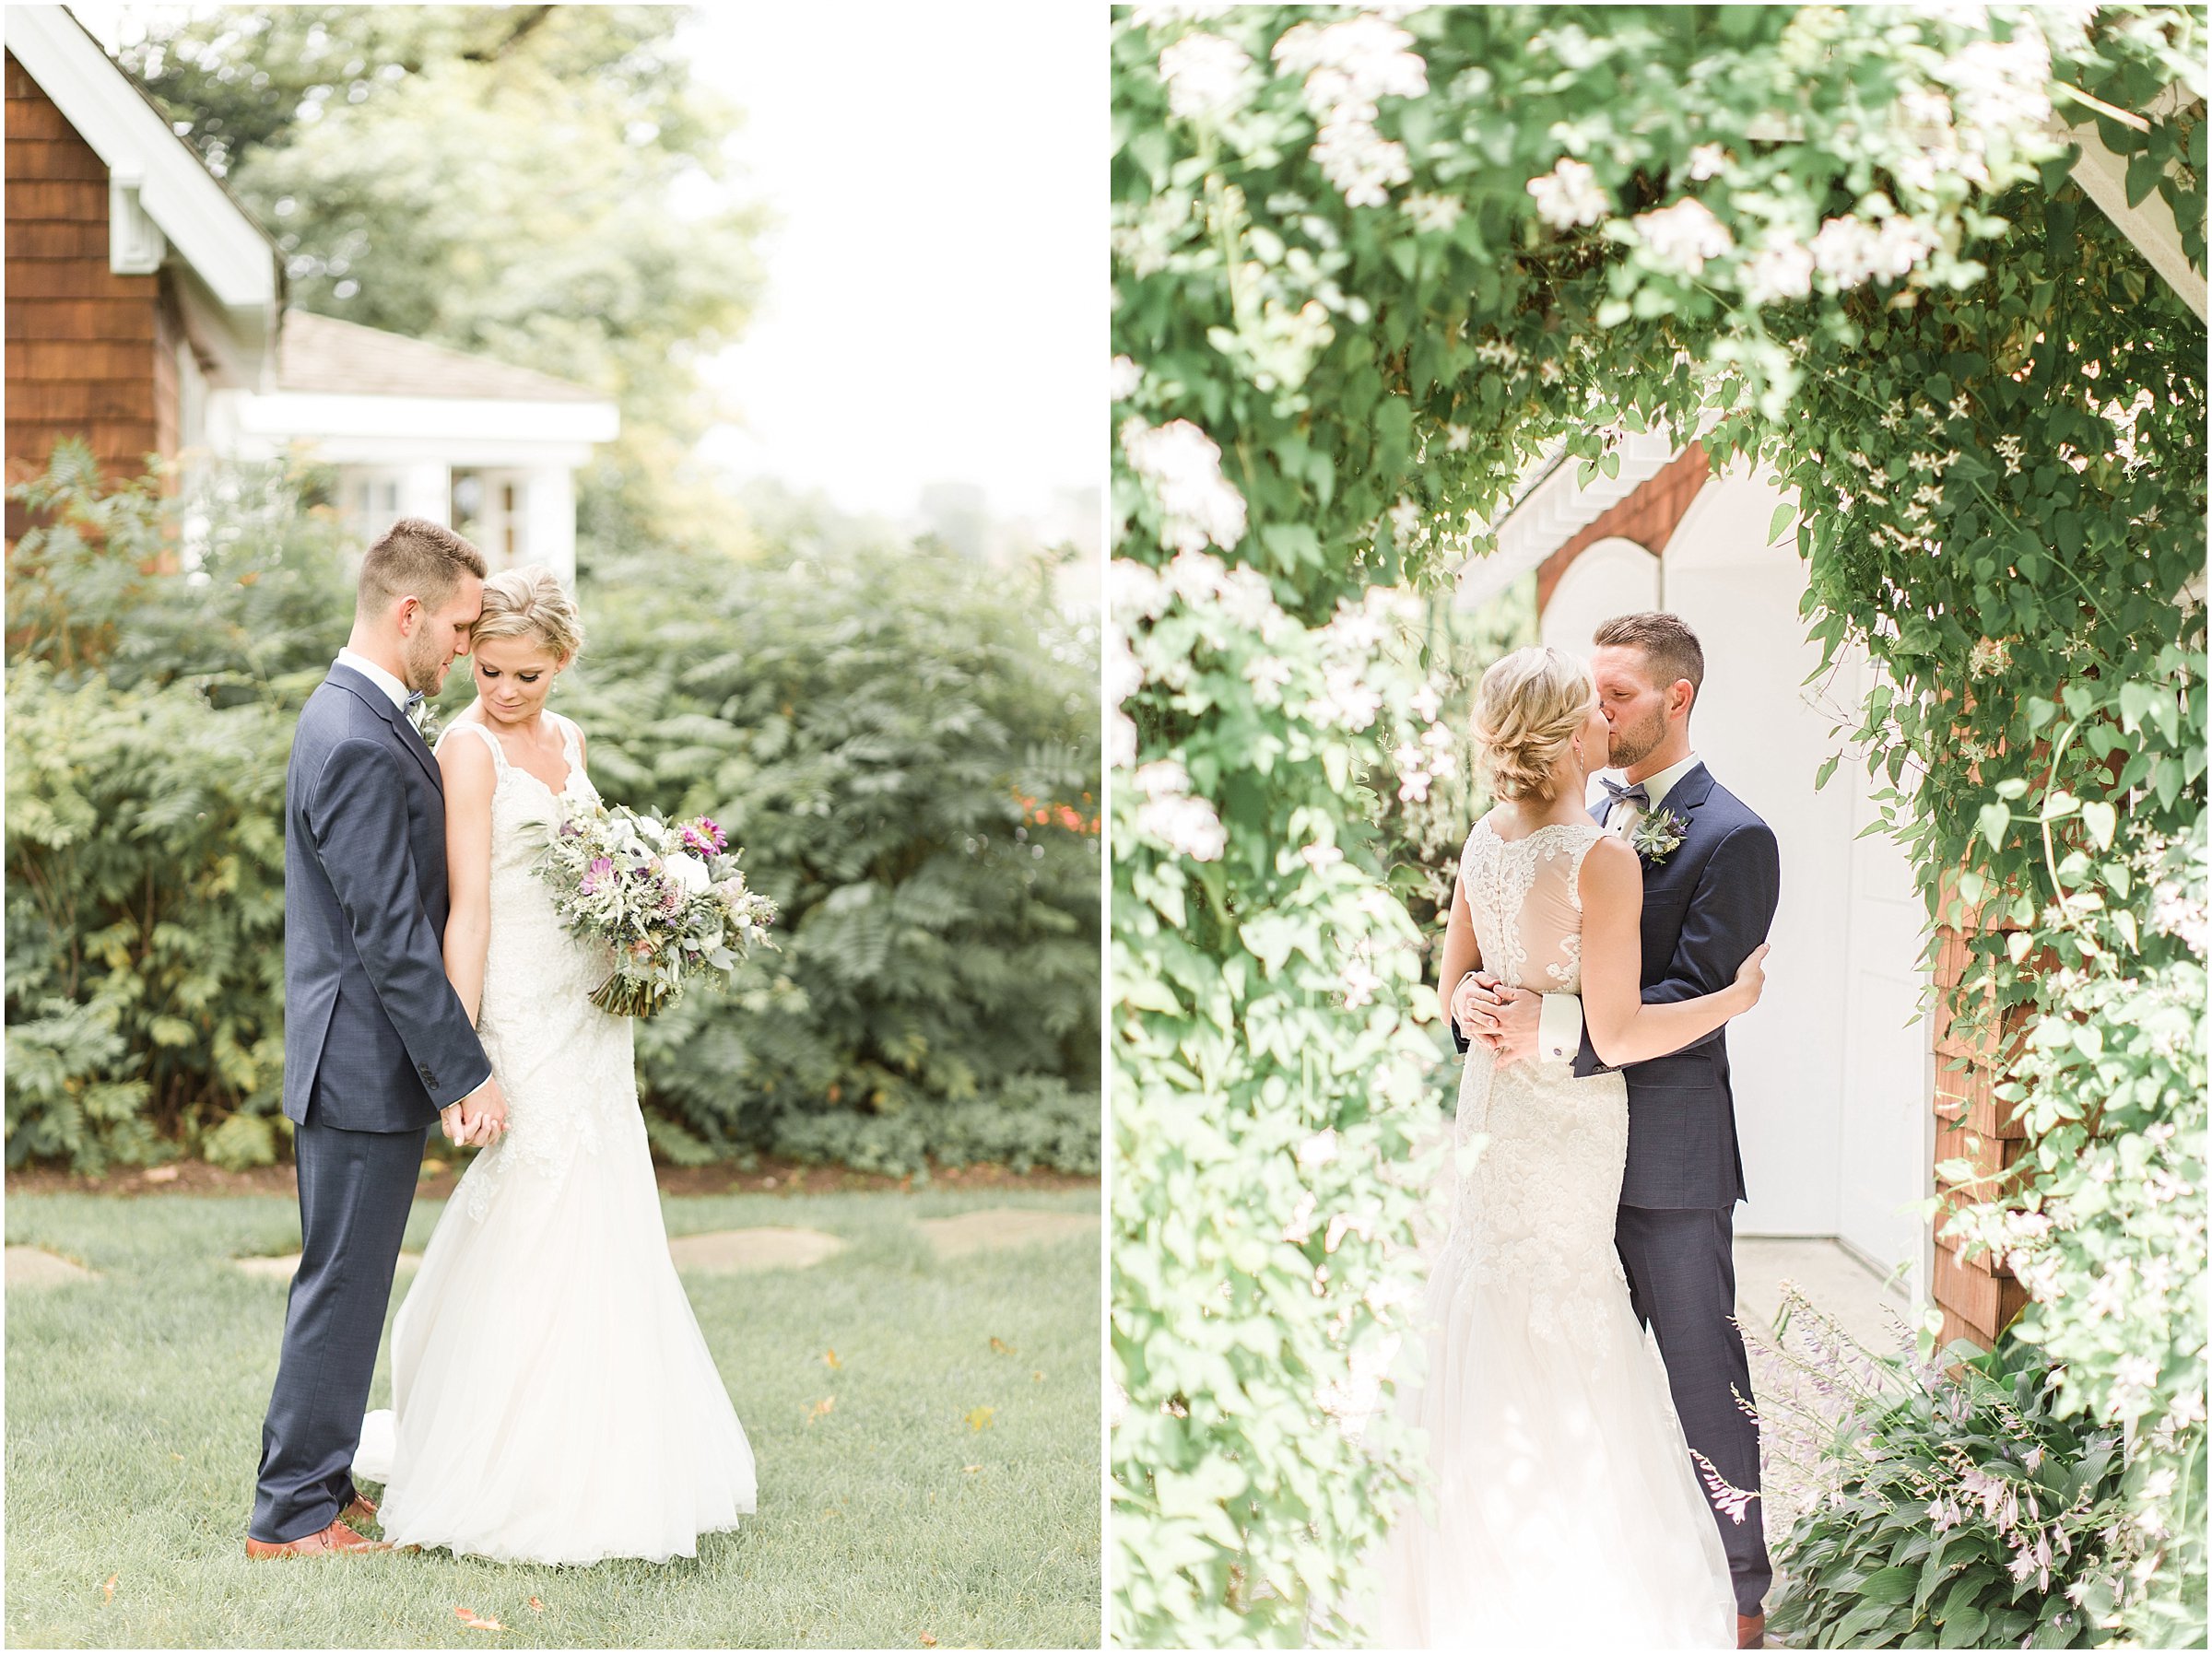 An Intimate Indianapolis Backyard Wedding